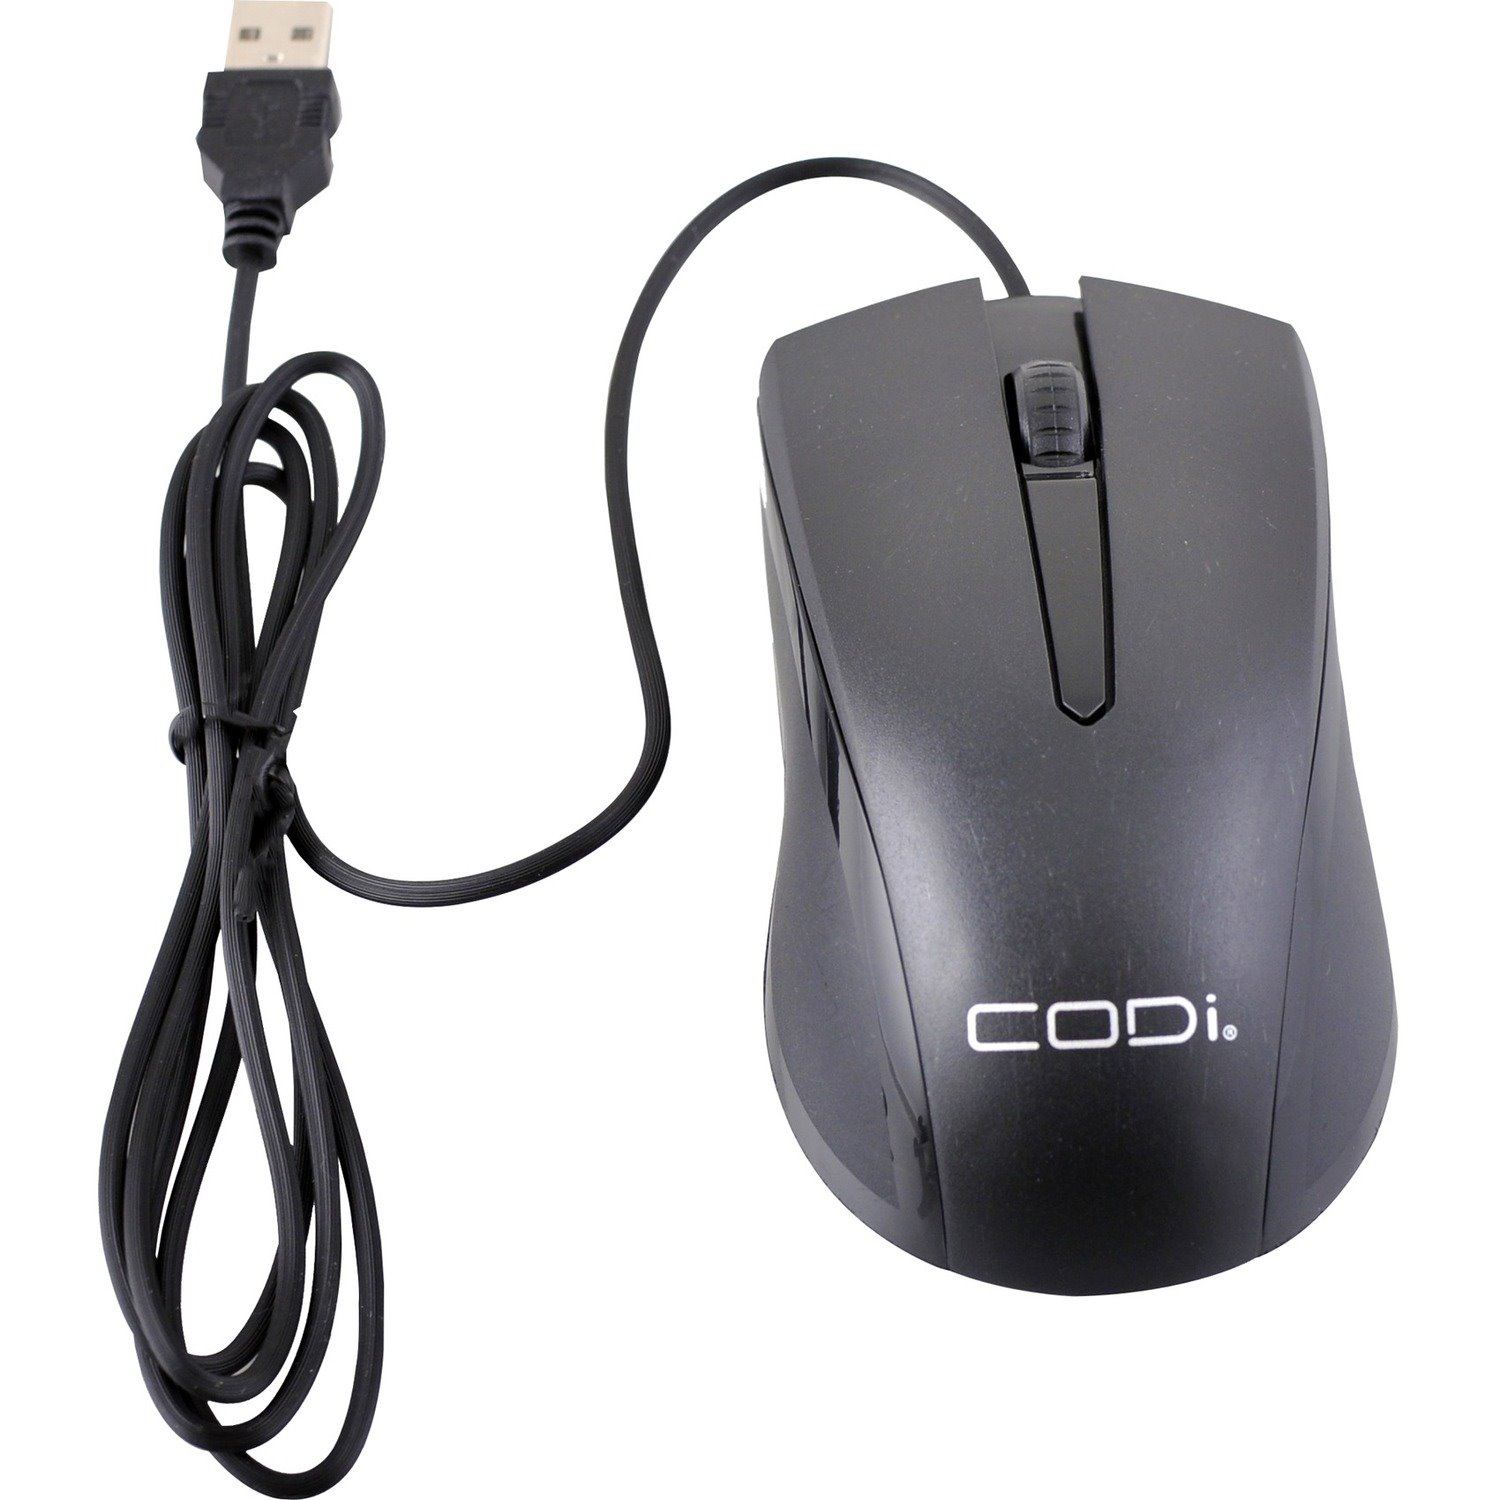 CODi Wired USB Optical Mouse